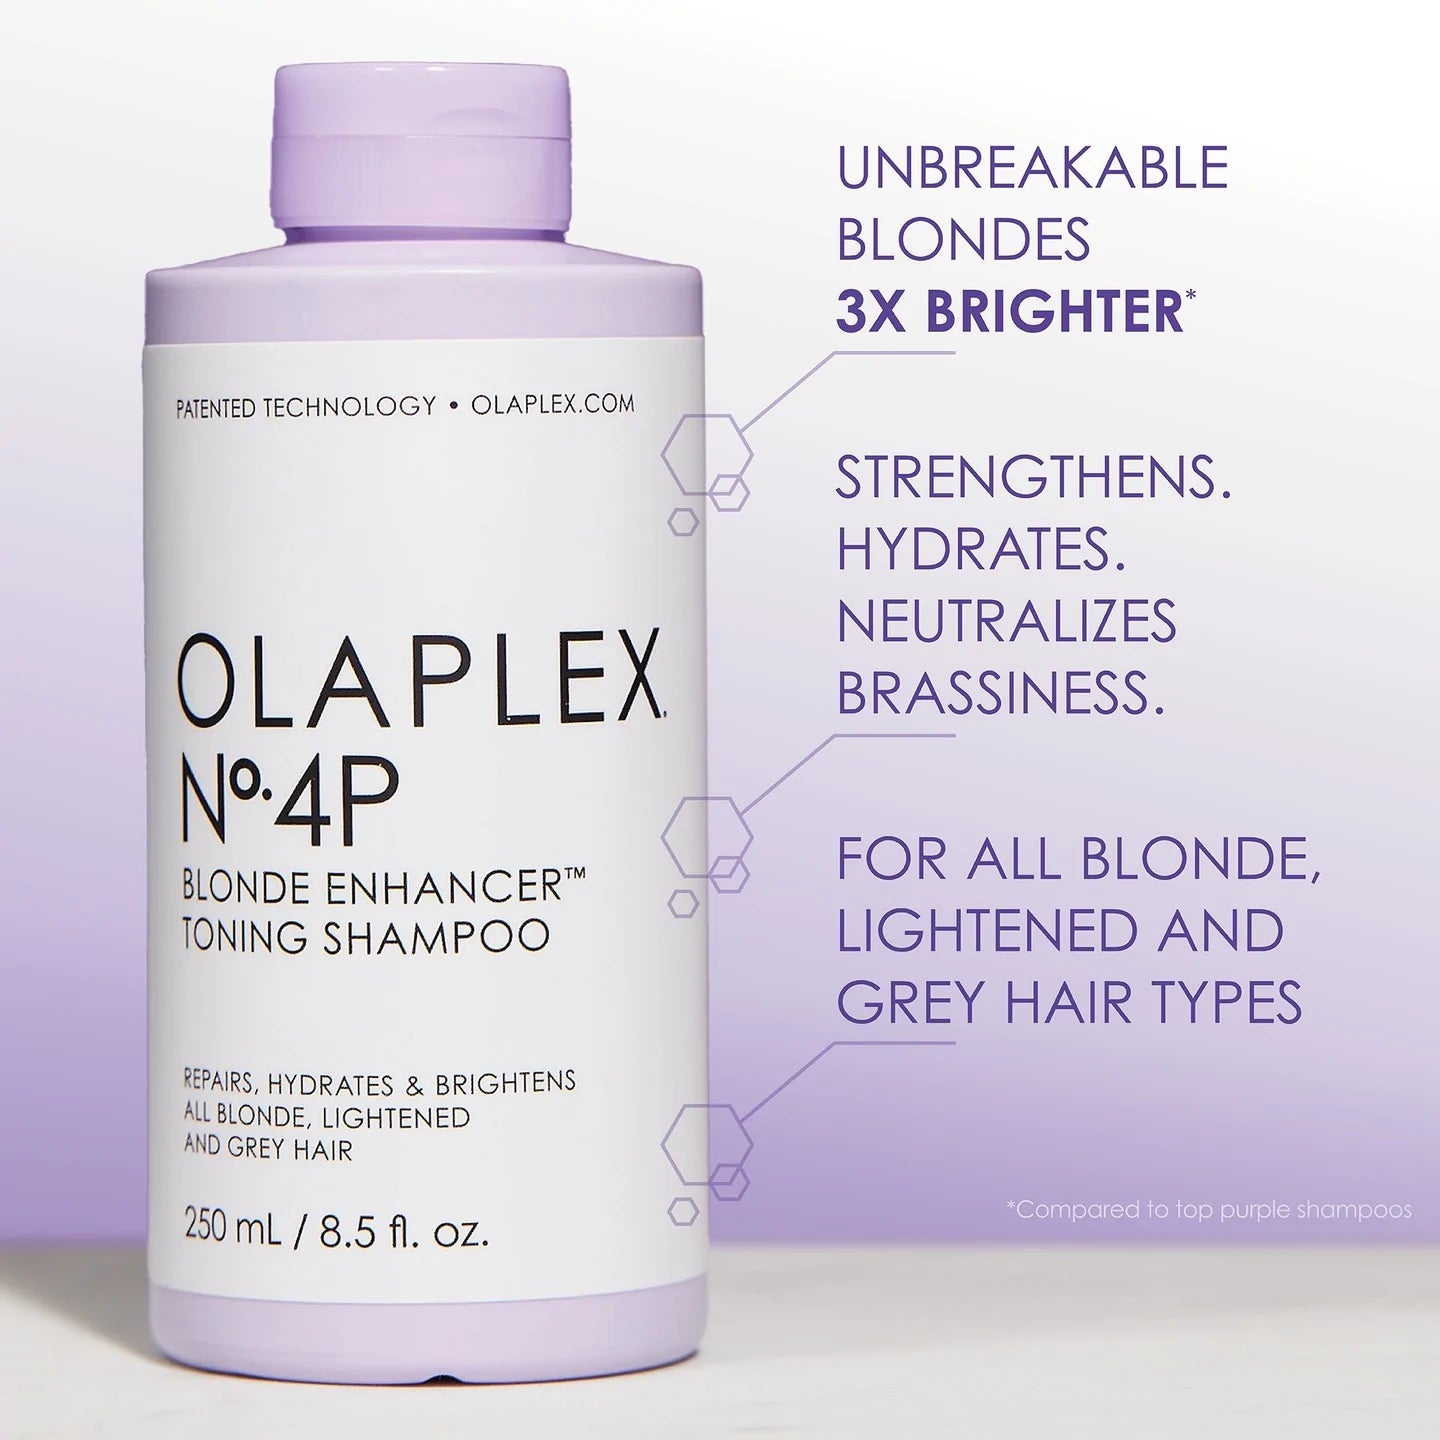 No. 4P Blonde Enhancer Toning Shampoo - The Coloroom 